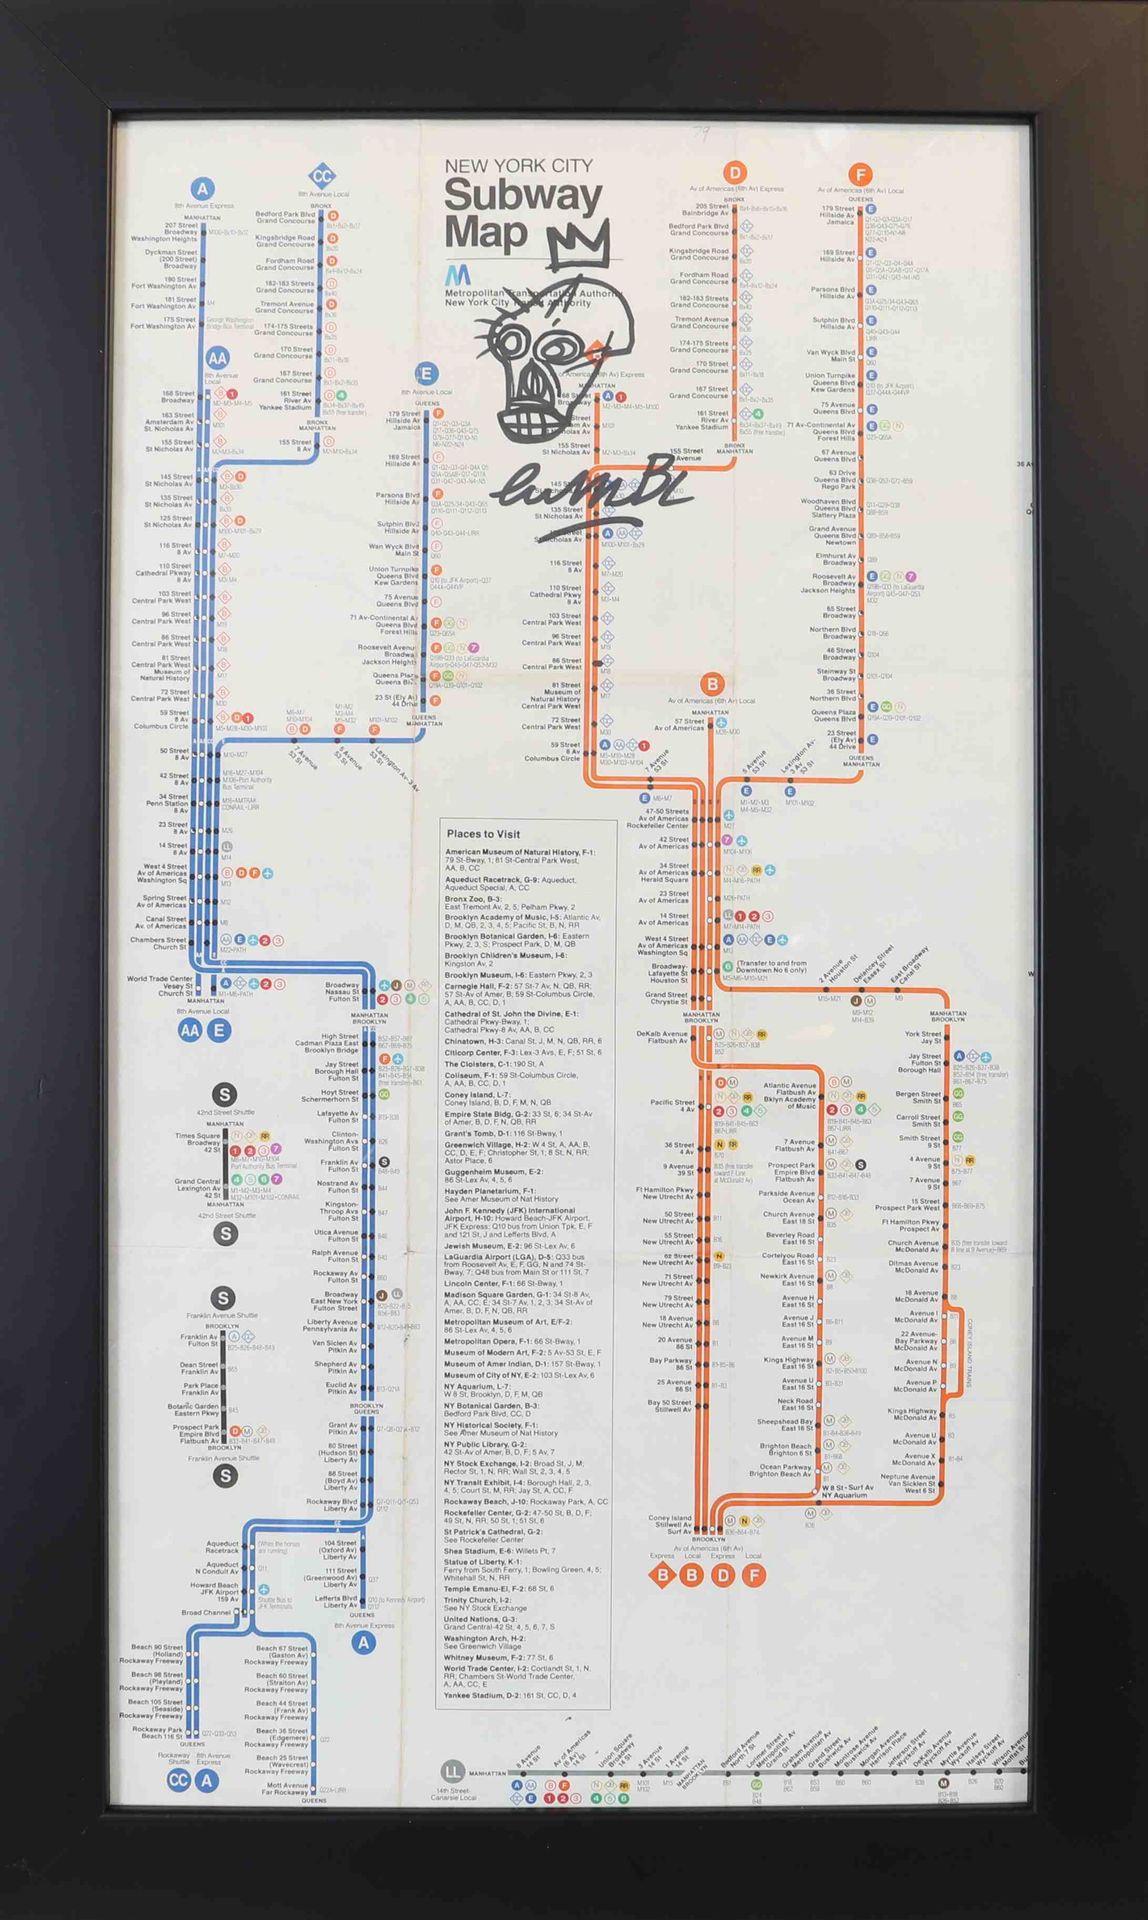 Null 让-米歇尔-巴斯奇亚（1960-1988）之后 
地铁地图 纽约市地铁。在让-米歇尔-巴斯奇亚之后绘制。 
在玻璃下装框 
尺寸：高：60；宽：36.&hellip;